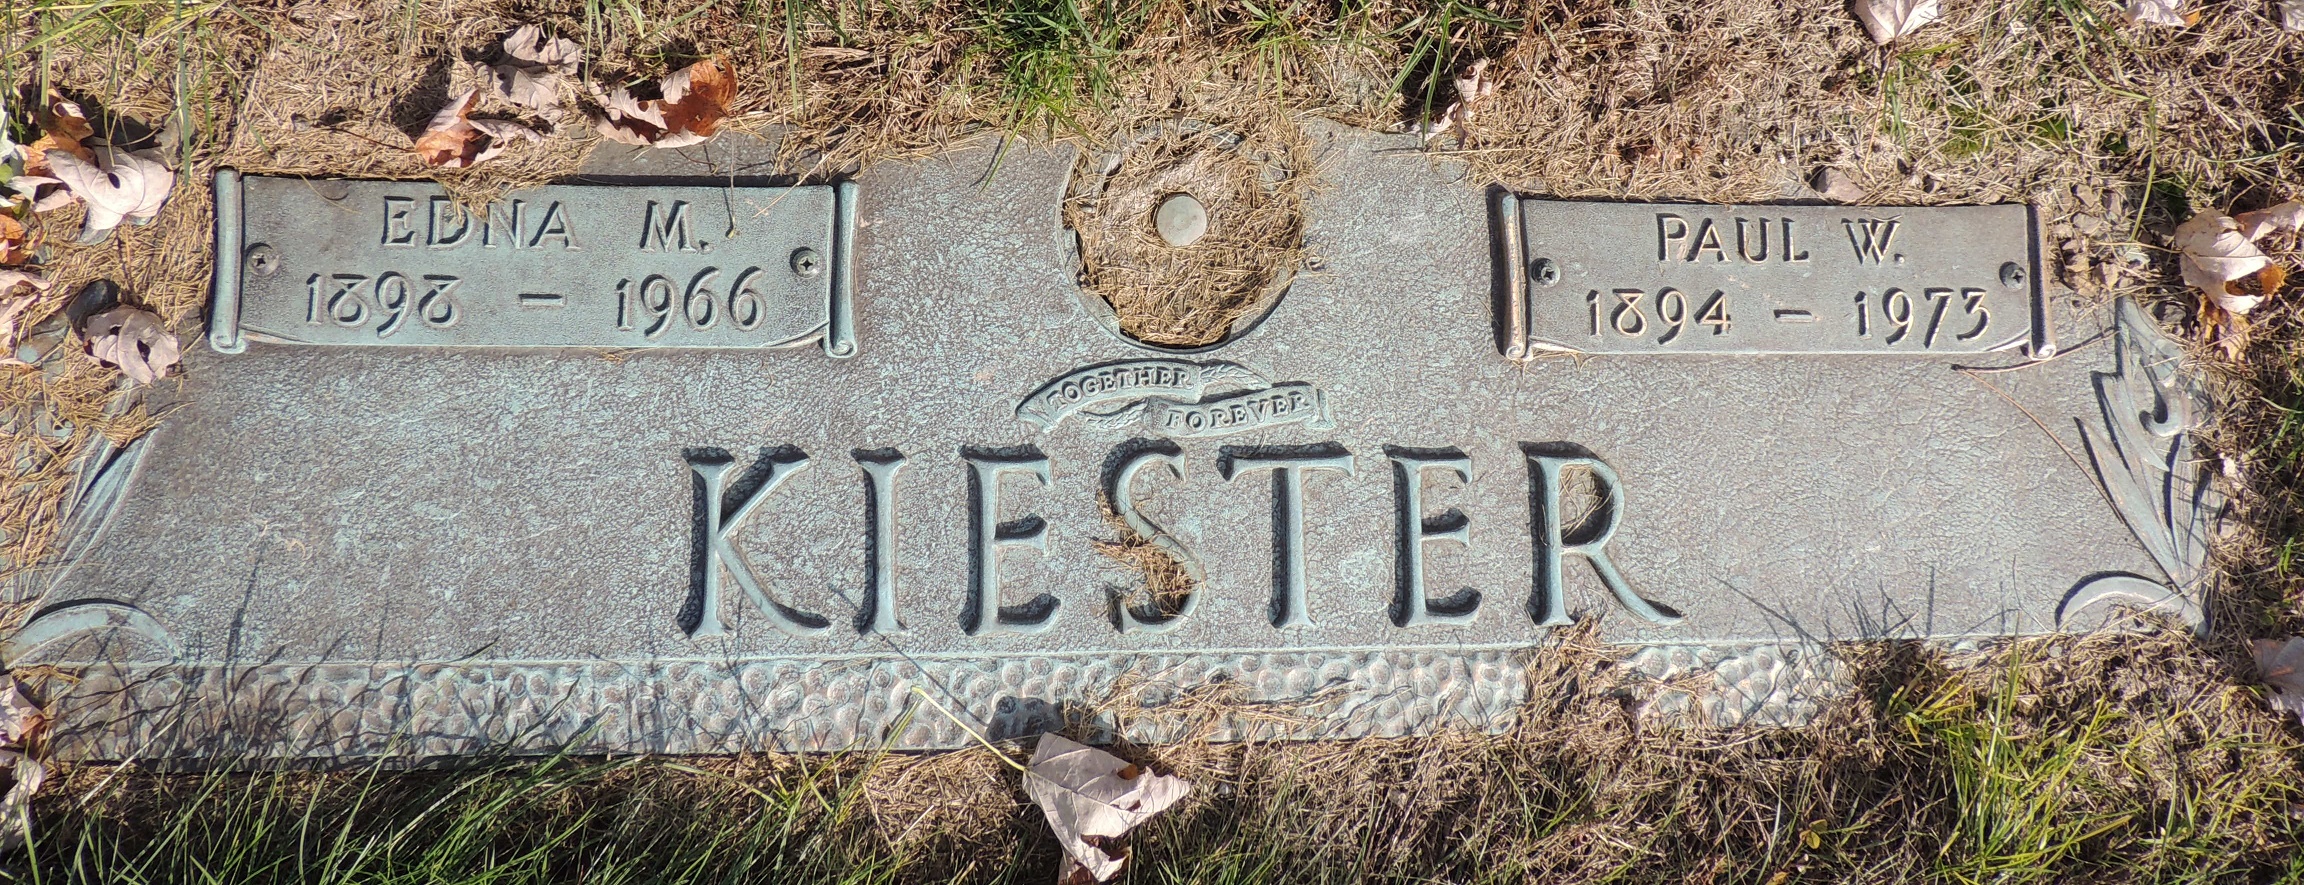 Edna May Stivason Kiester 1898-1966